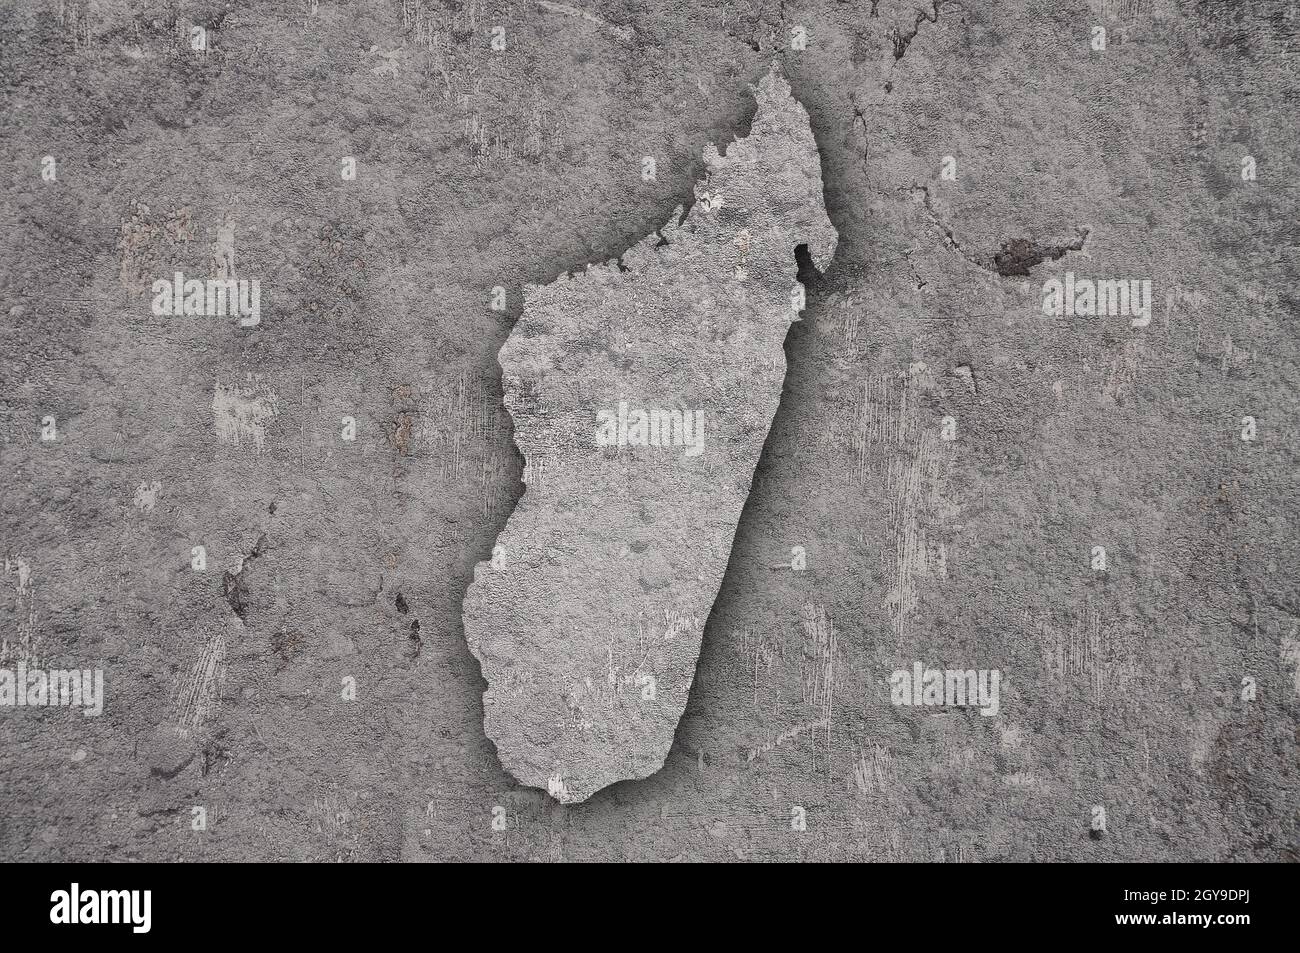 Map of Madagascar on weathered concrete Stock Photo